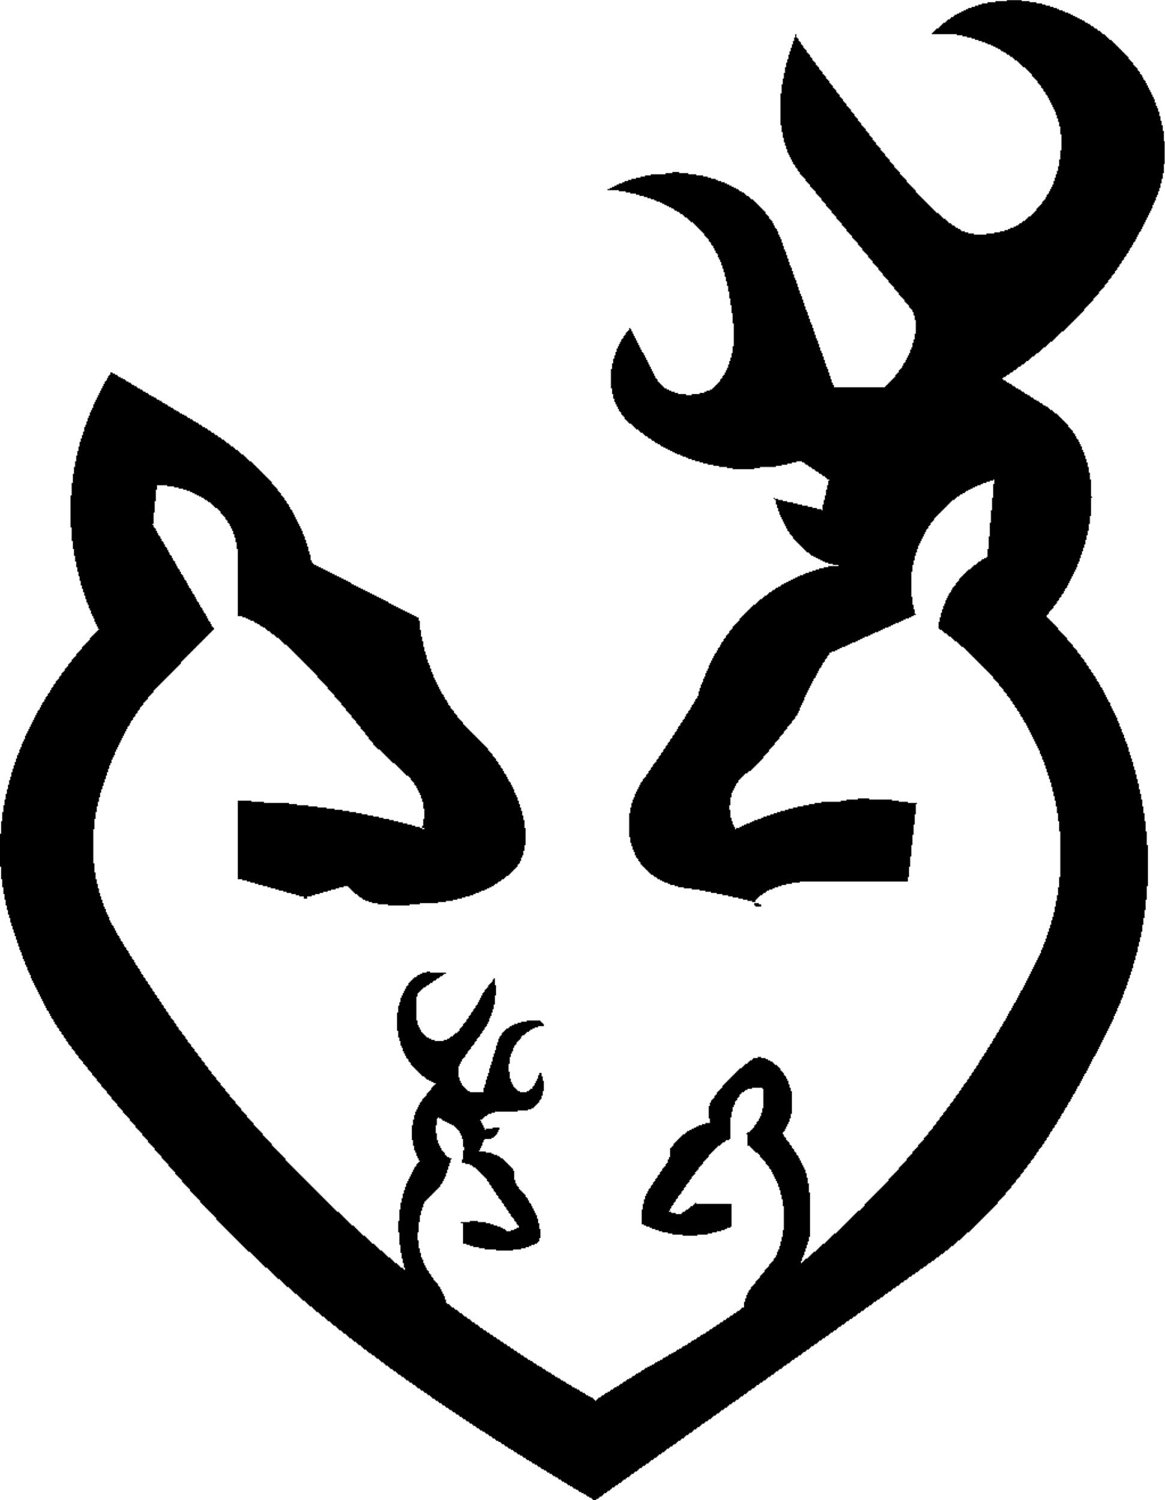 Browning deer head logo clipart